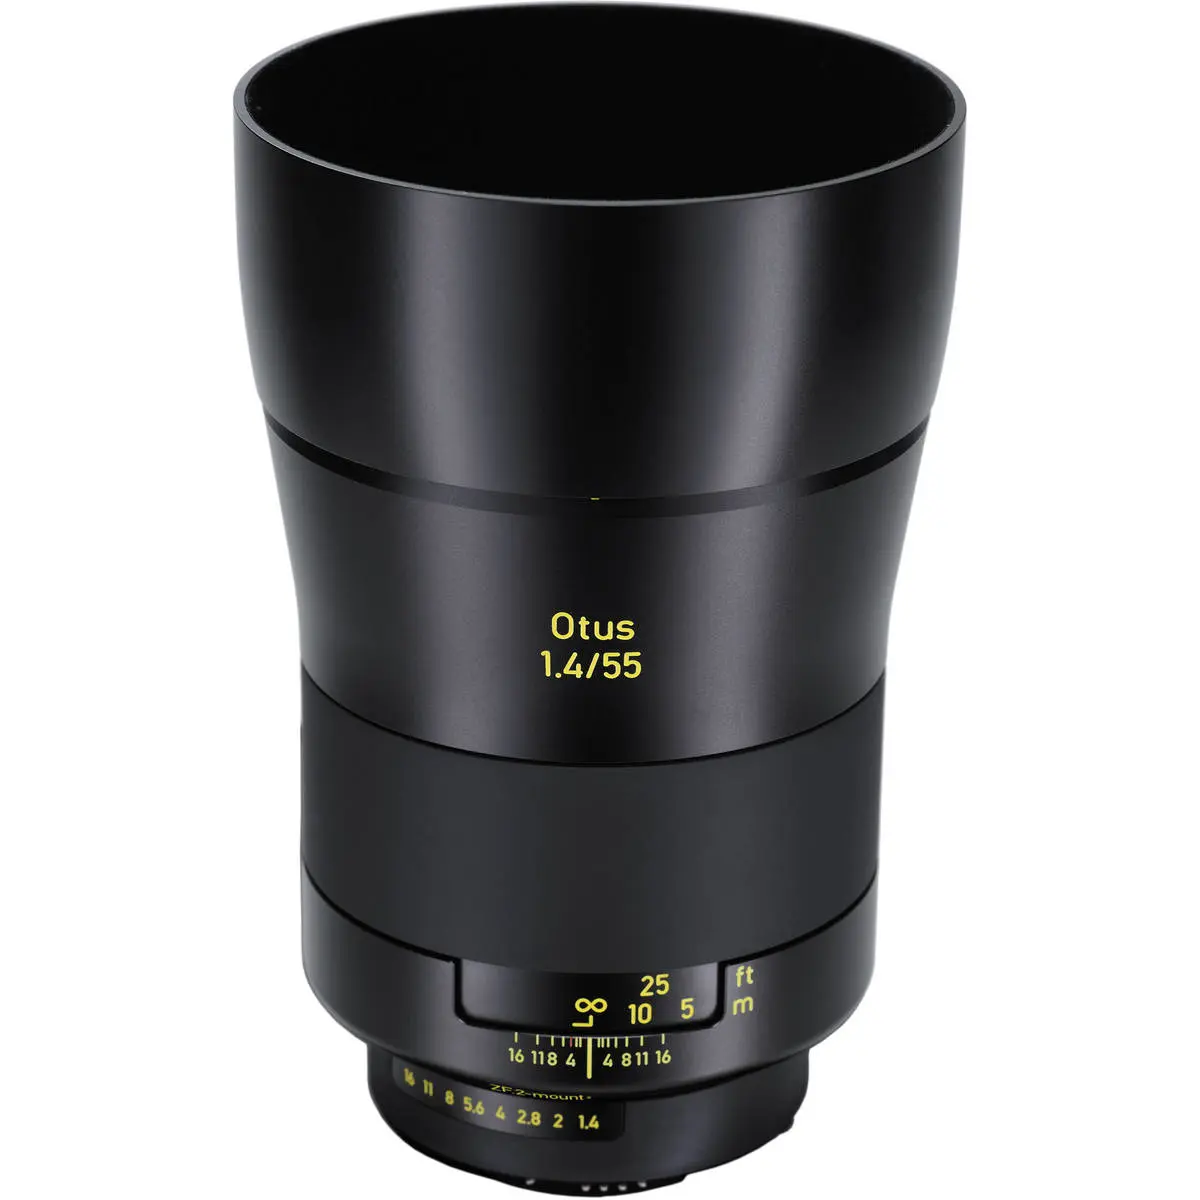 4. Carl Zeiss Otus Distagon T* 1.4/55 ZF.2 (Nikon) Lens